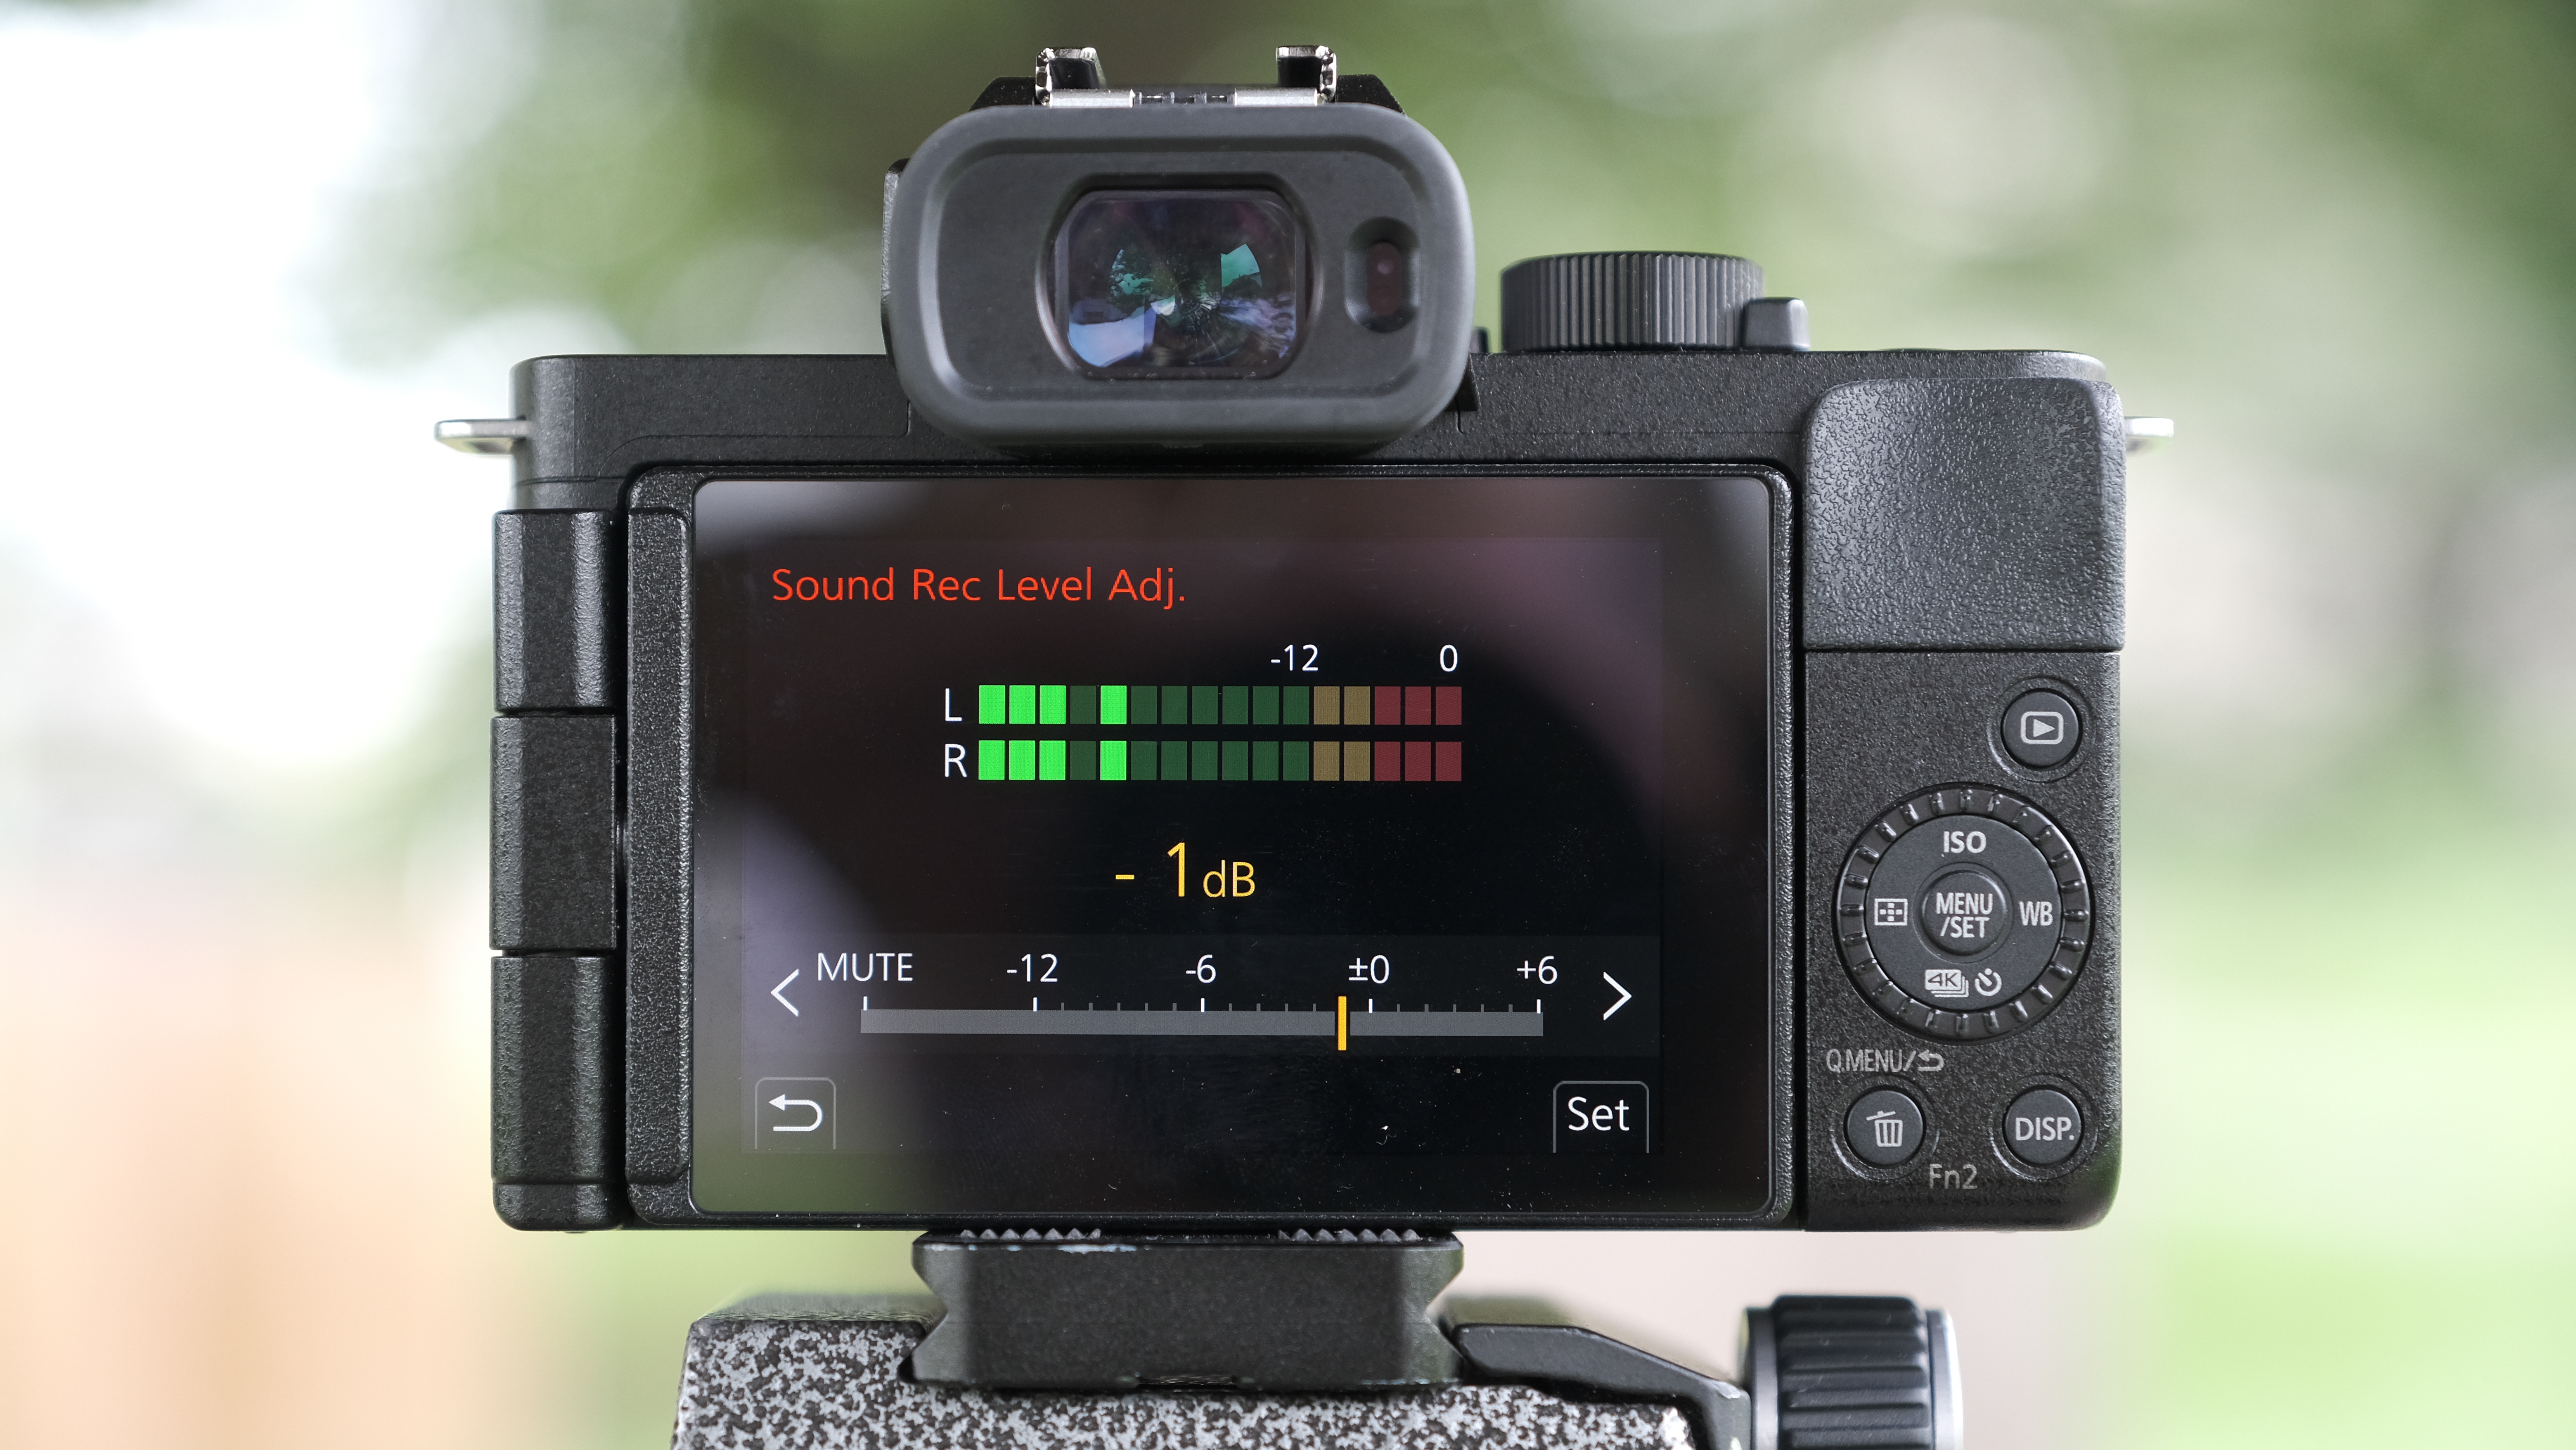 Panasonic's New Lumix G100D Camera Upgrades the EVF and Adds USB-C